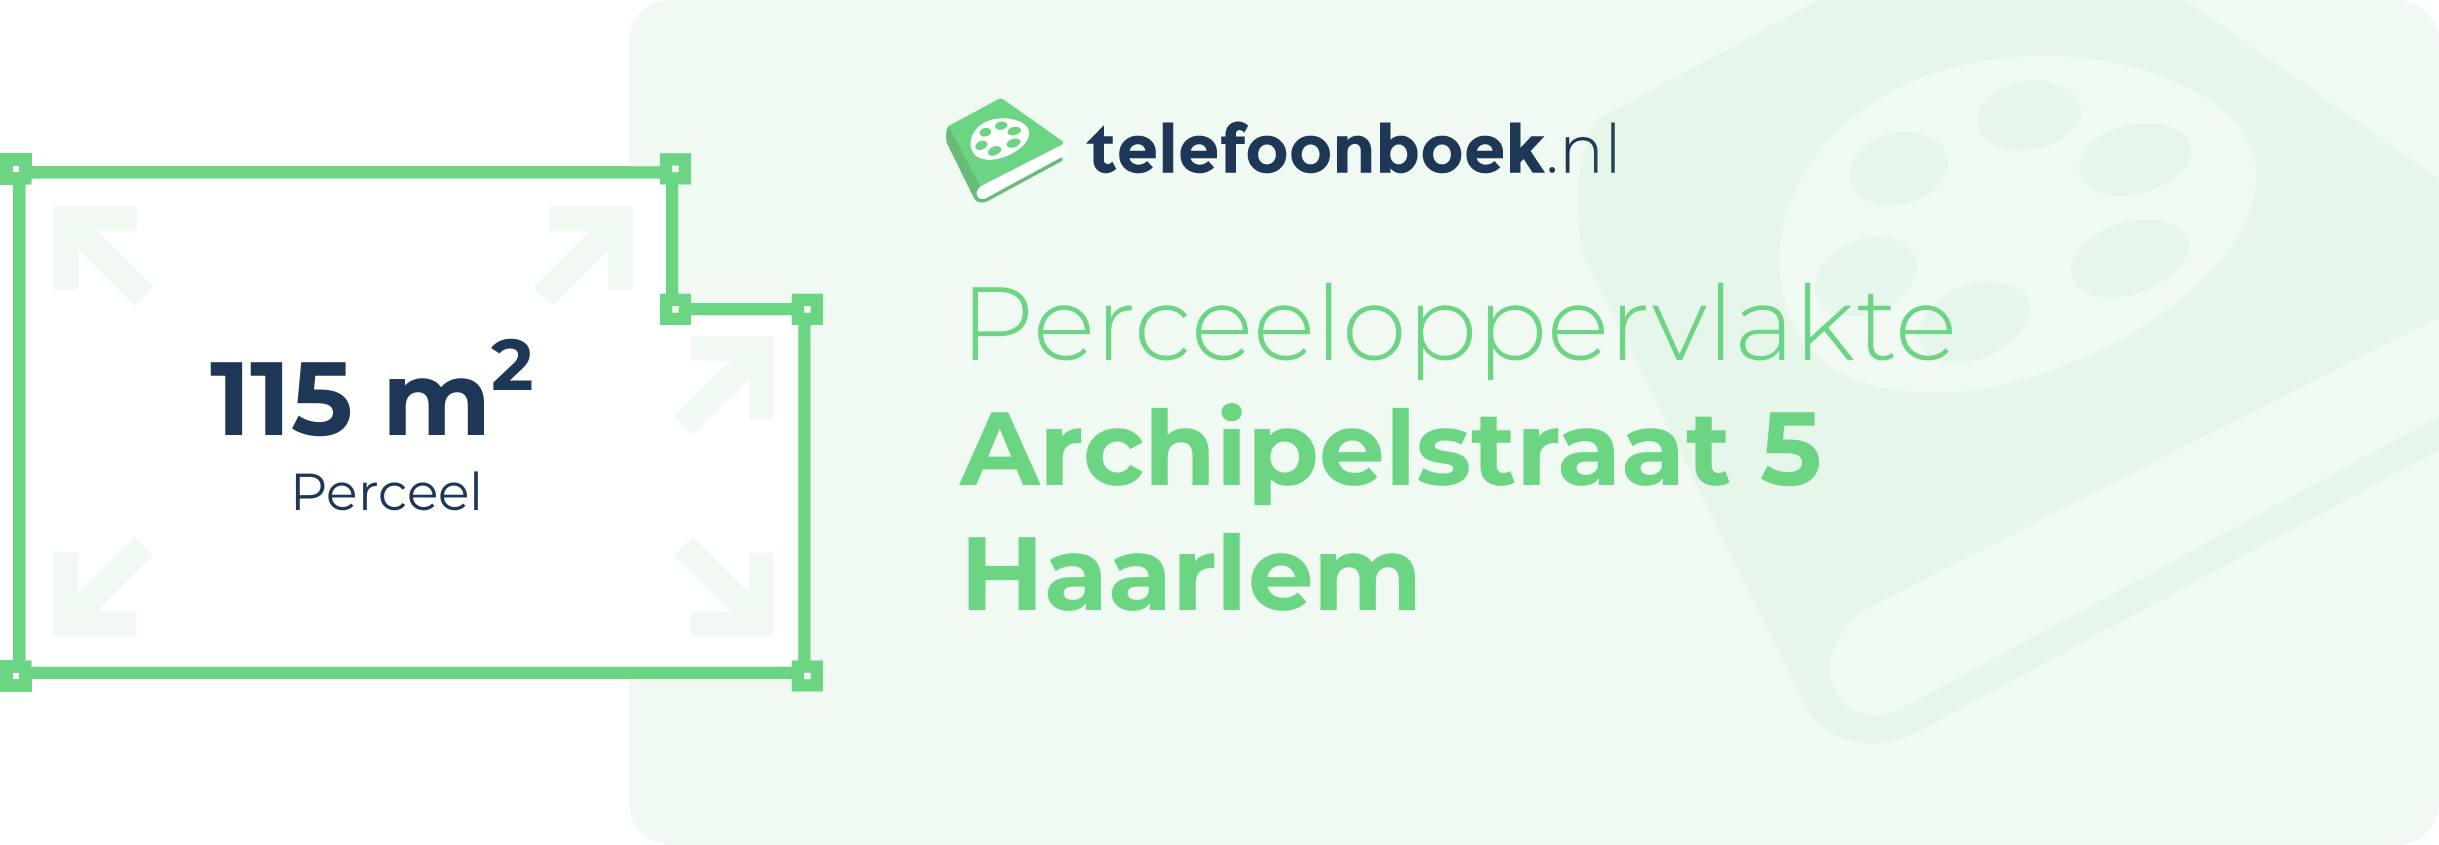 Perceeloppervlakte Archipelstraat 5 Haarlem